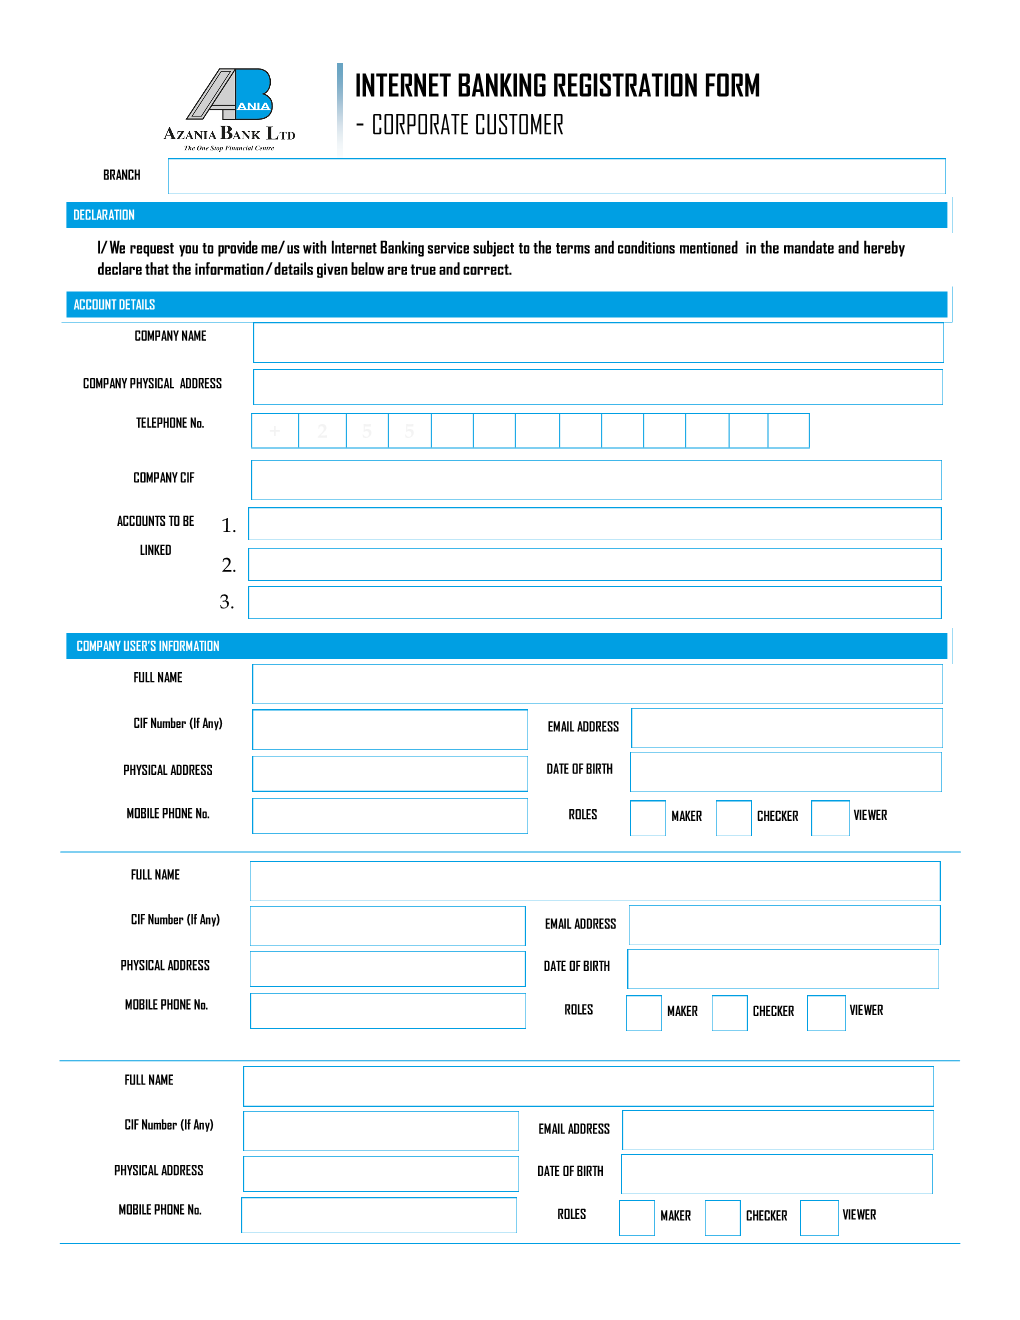 Internet Banking Registration Form - Corporate Customer